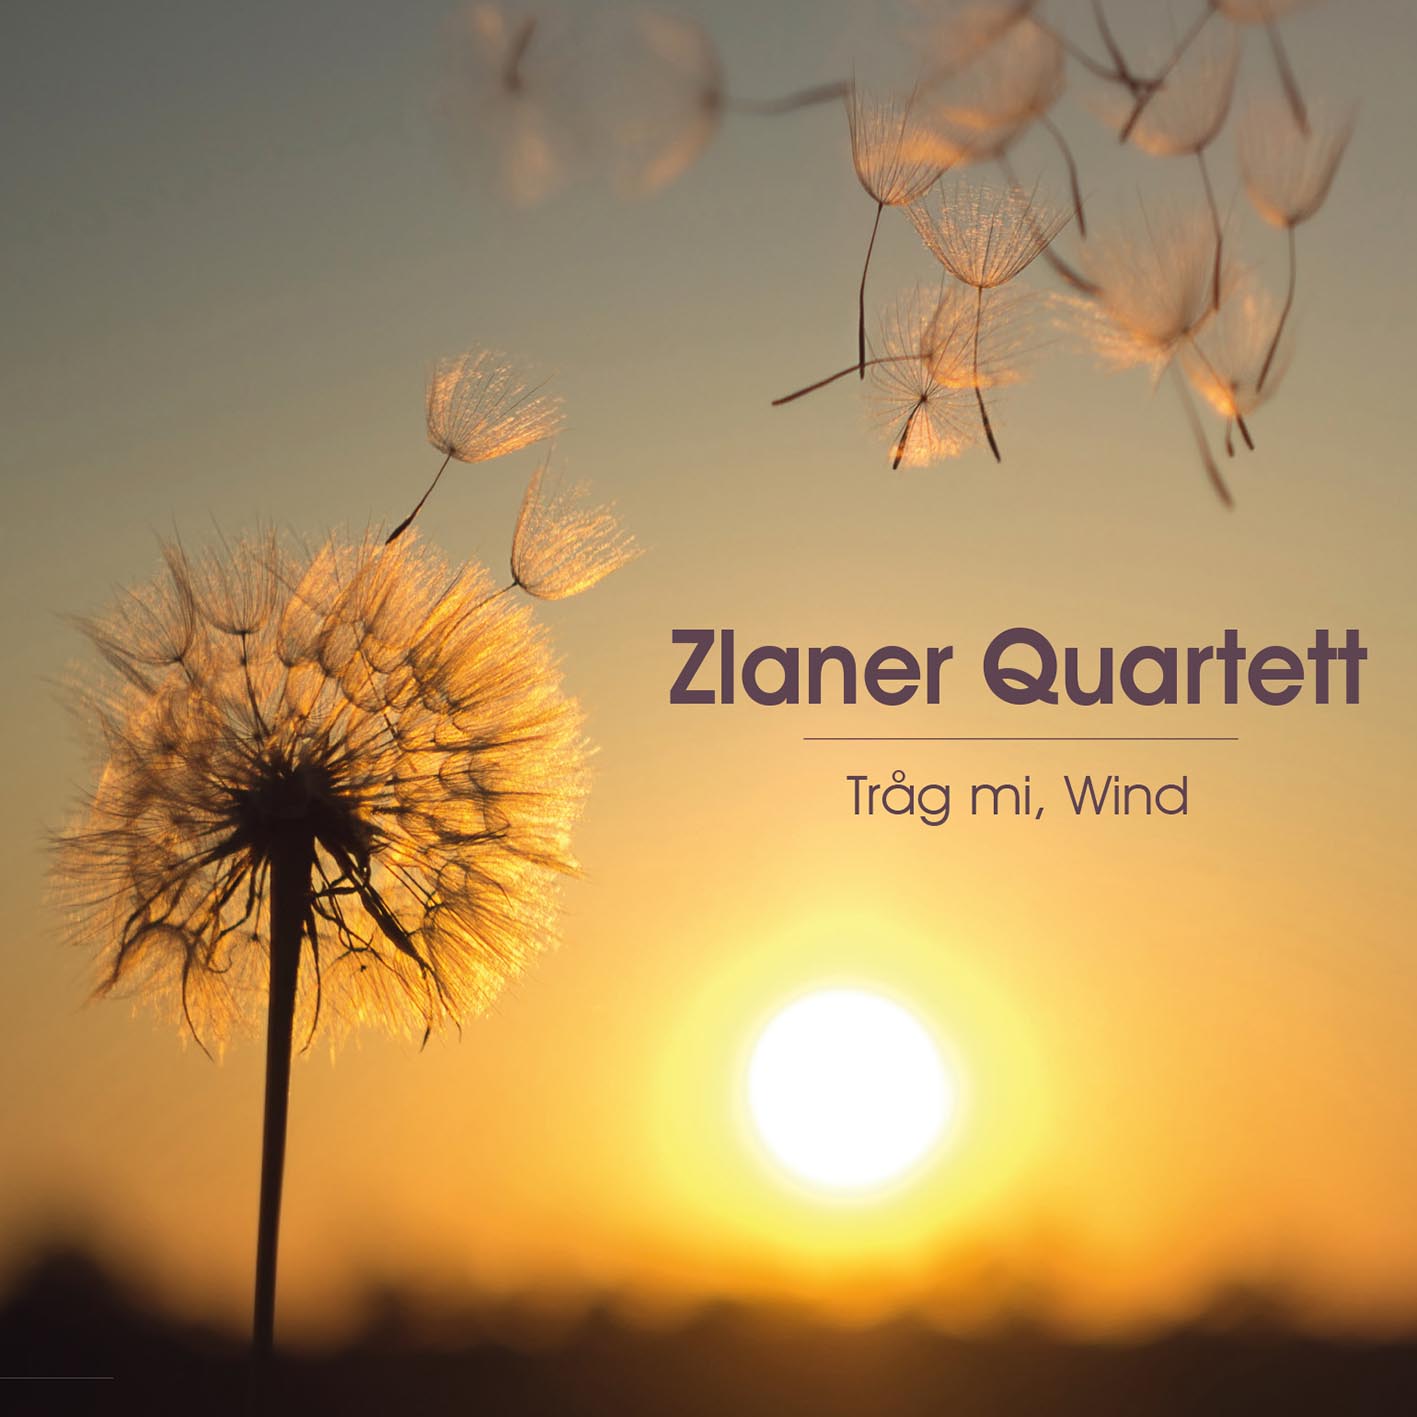 DRCD-2103 Zlaner Quartett "Tråg mi, Wind"